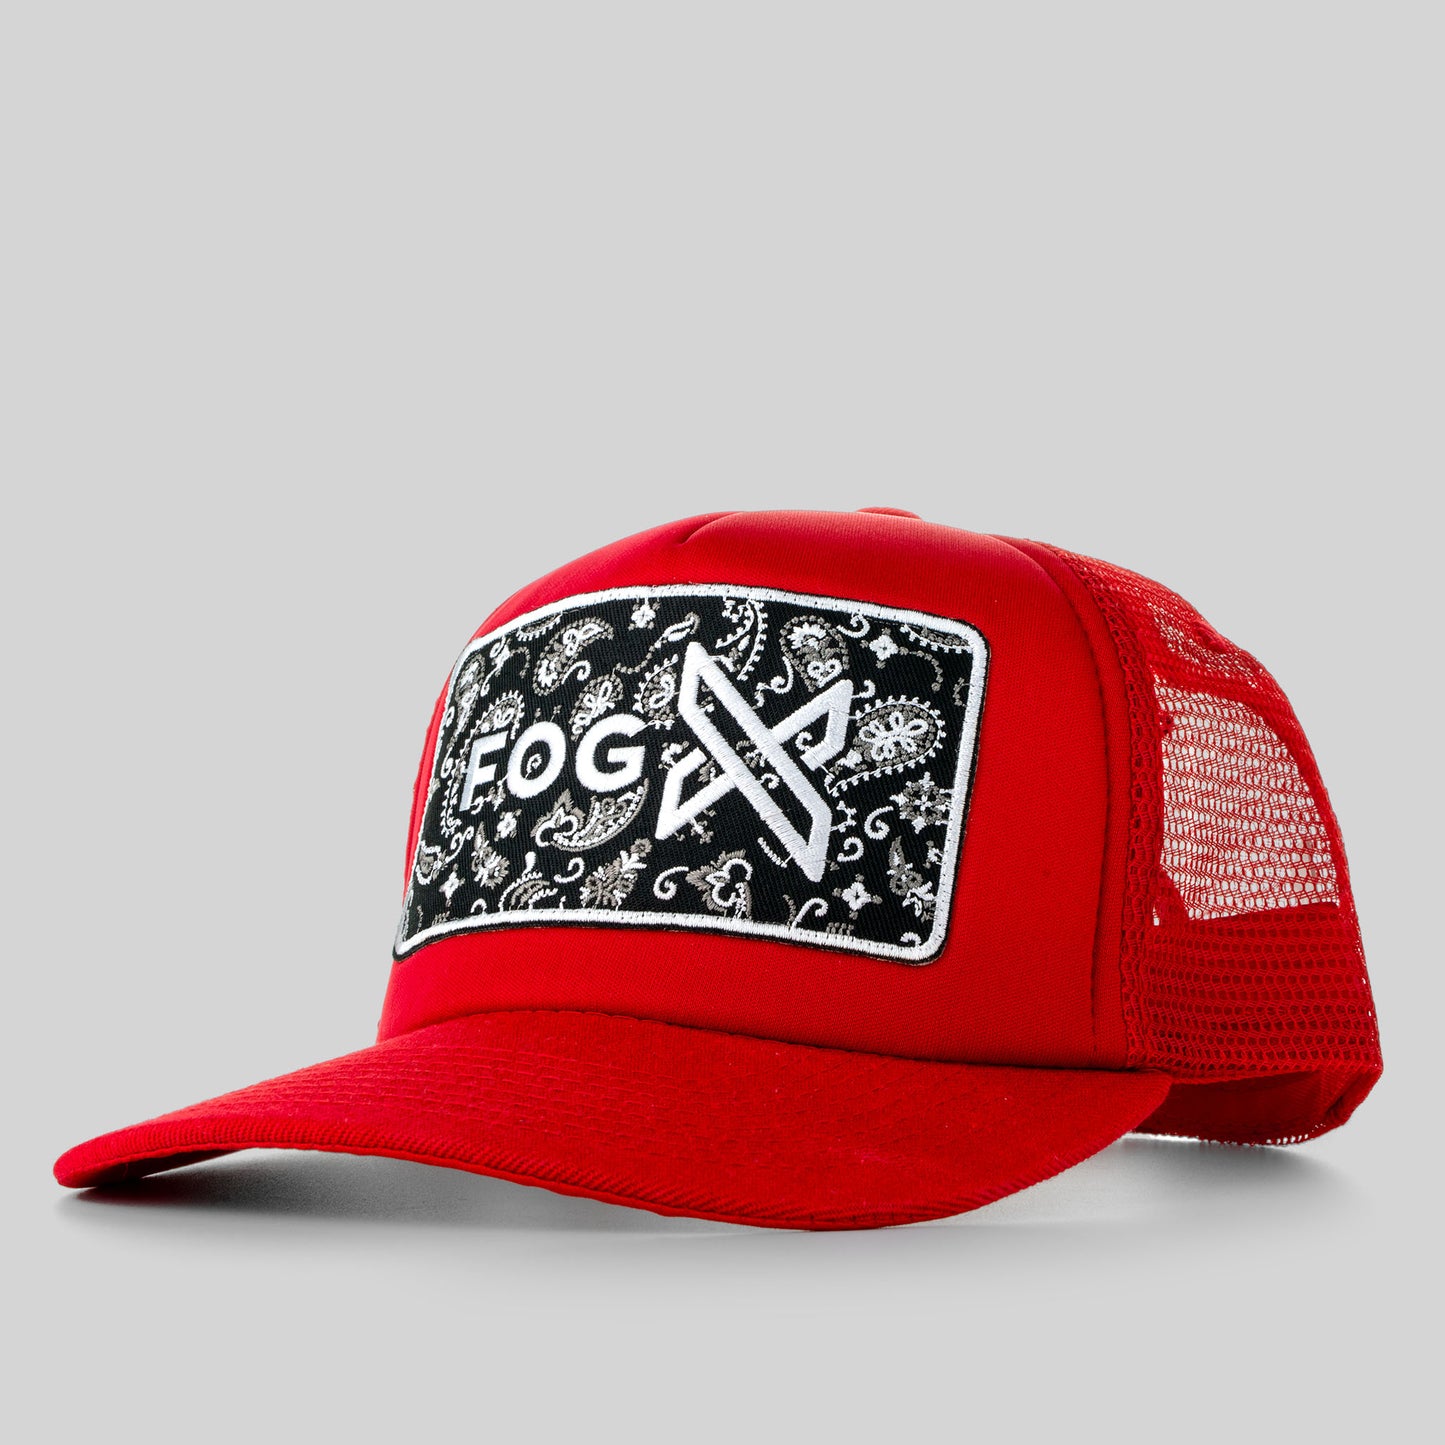  Fog X Trucker Hat Soft Tough Snapback Red